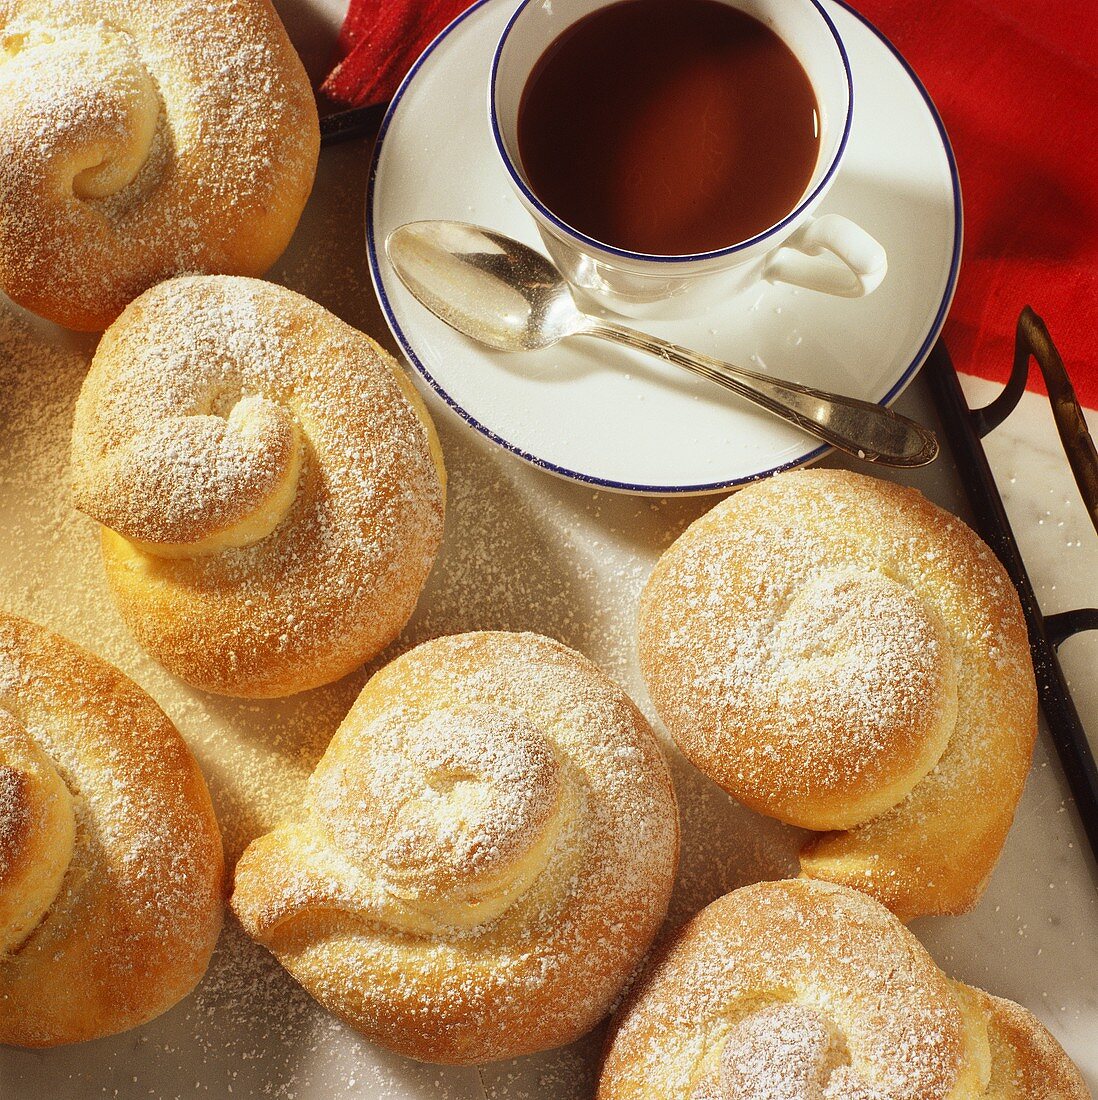 Spanish esmenaldas (yeast pastries) with icing sugar & coffee